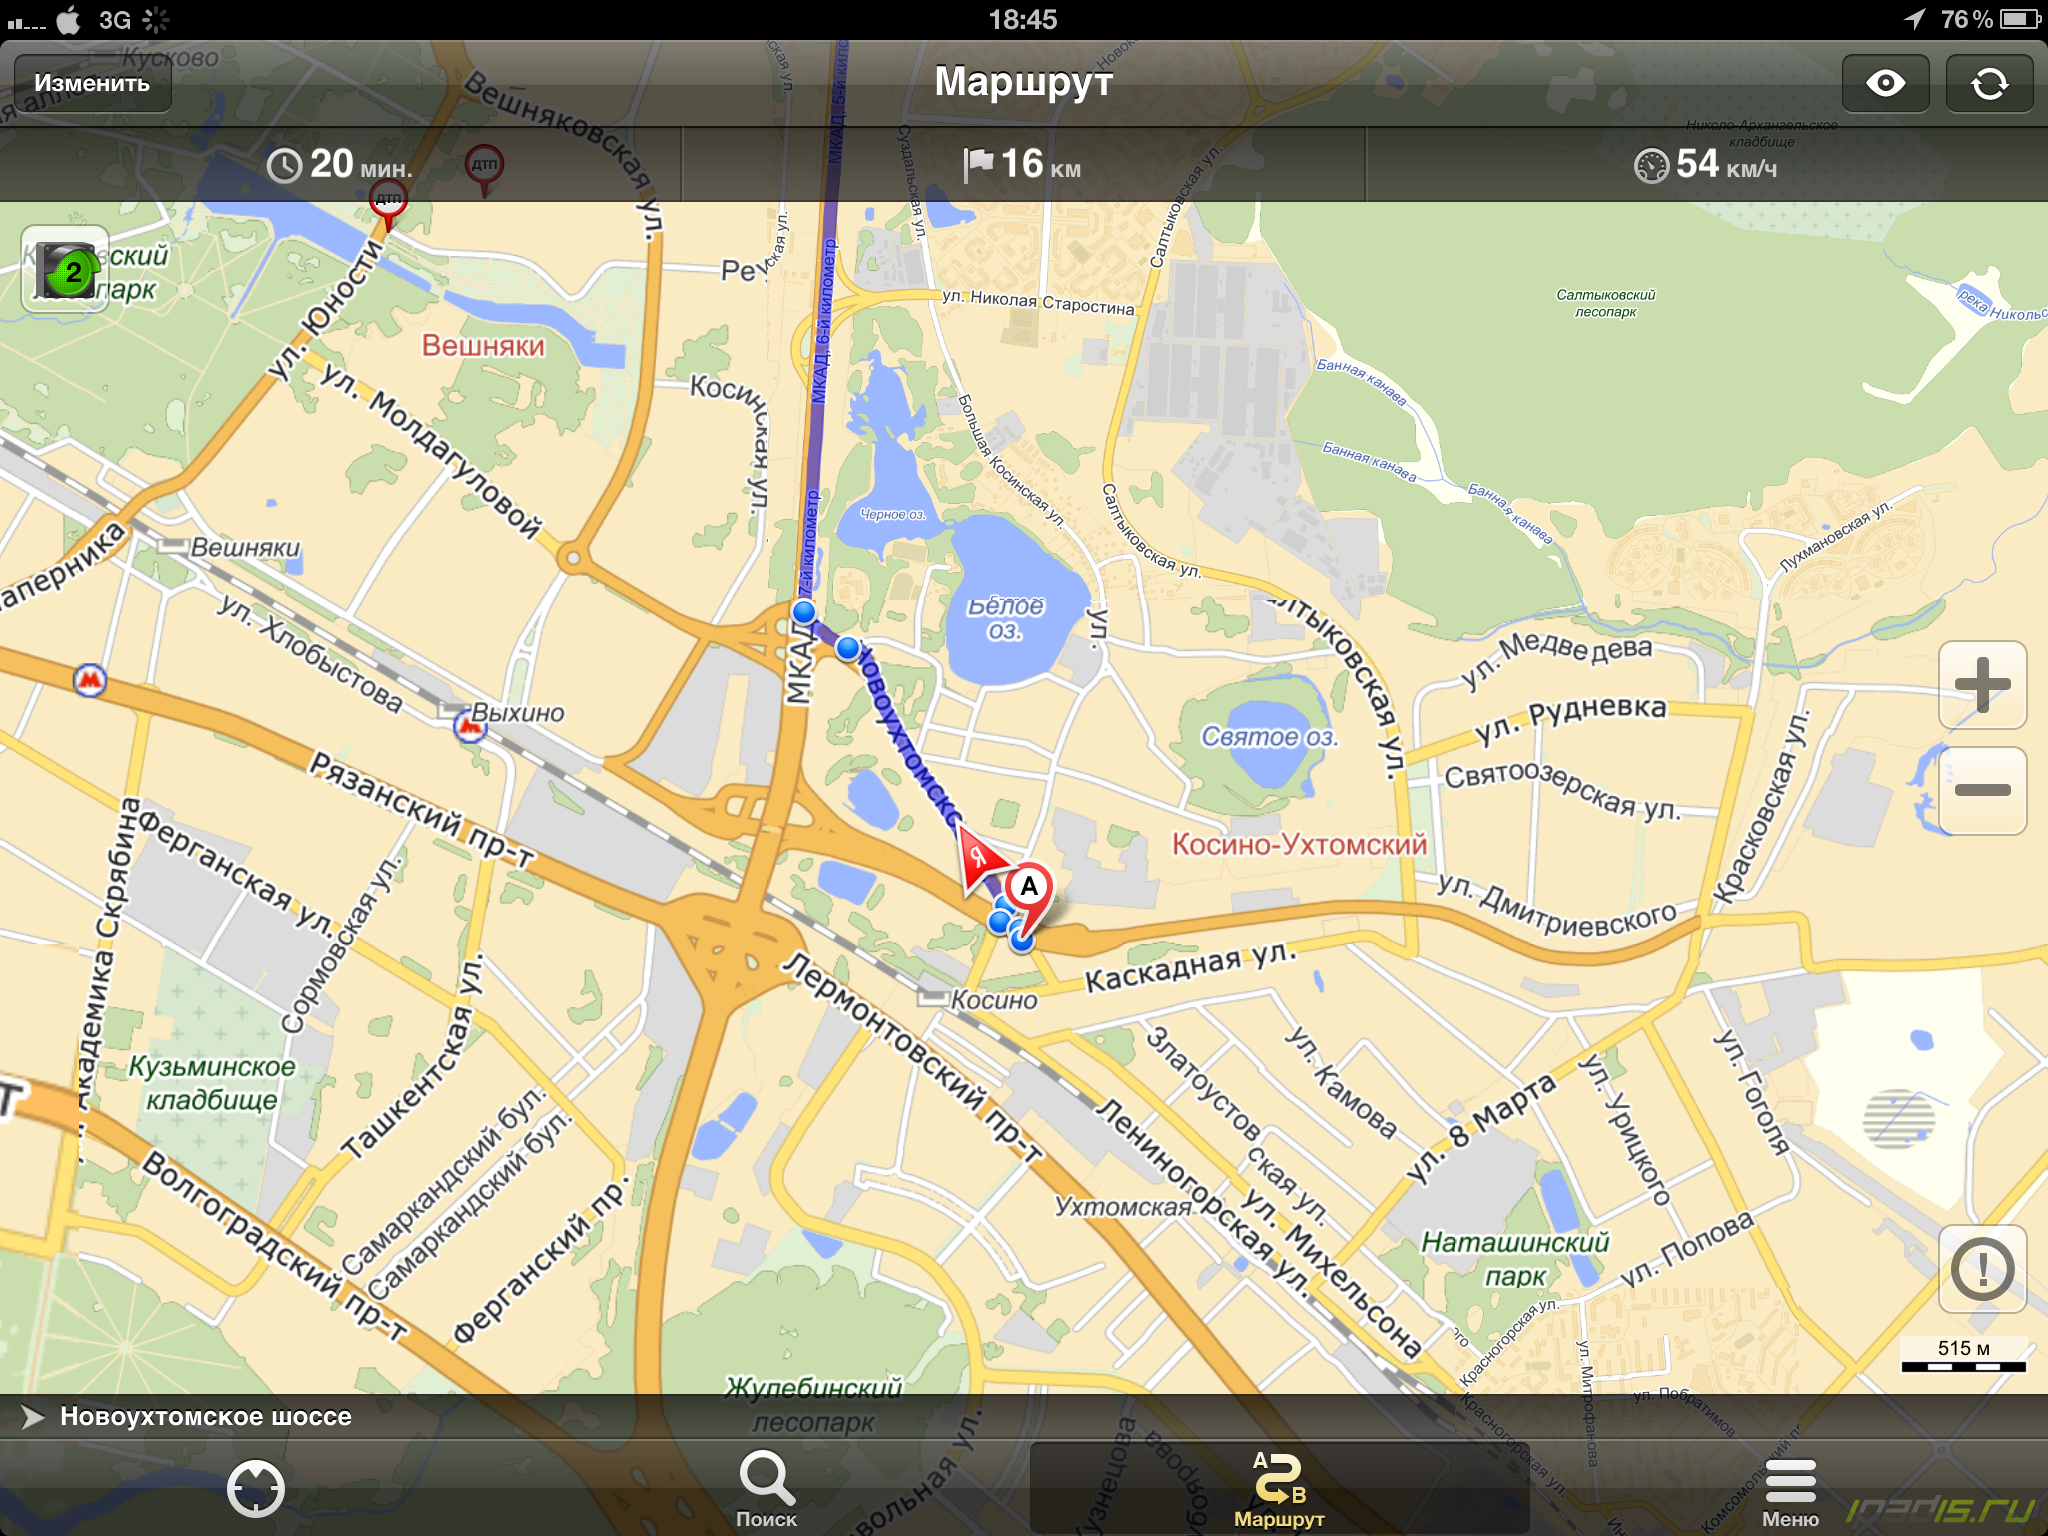 Где я на карте сейчас. Яндекс карты. Геолокация на карте.